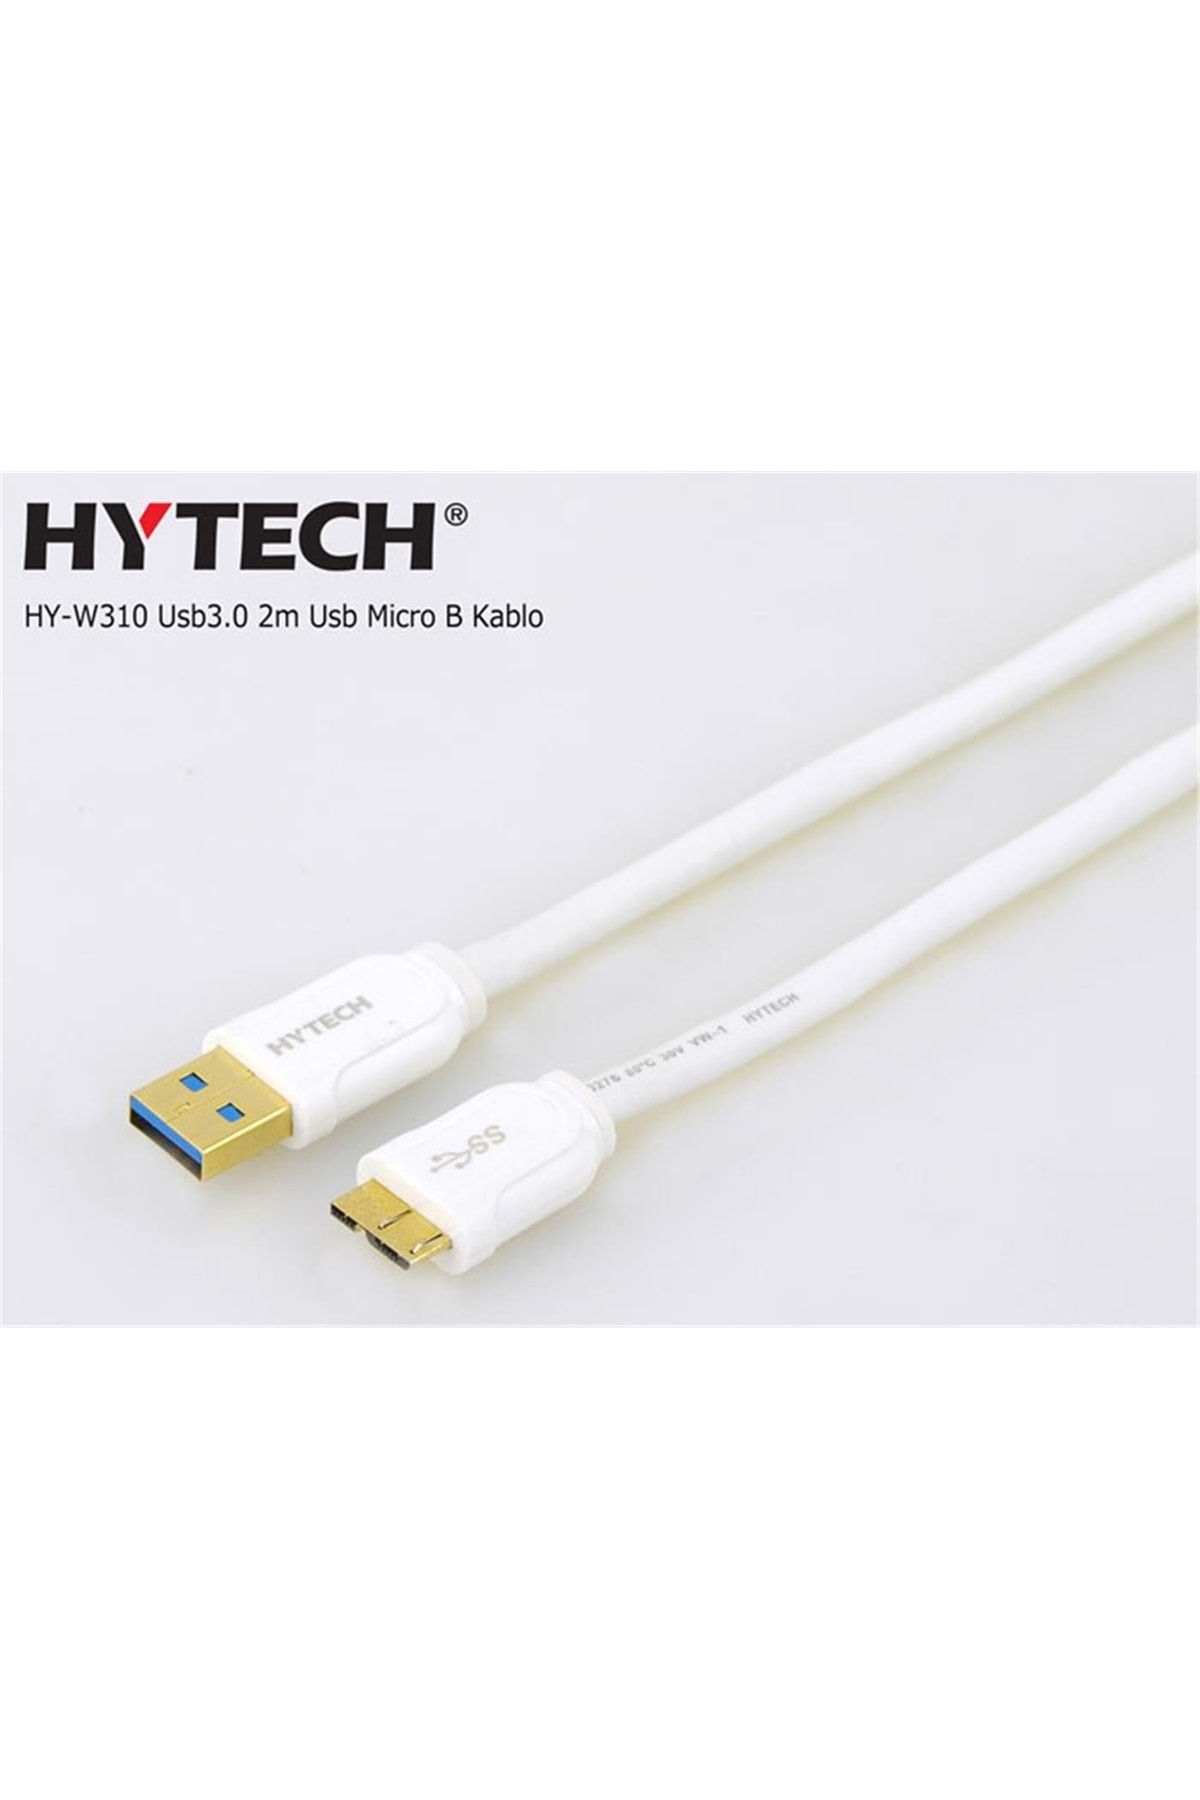 Hytech Hy-w310 Usb3.0 2m Usb Micro B Note3-s5 Harddisk Kablo